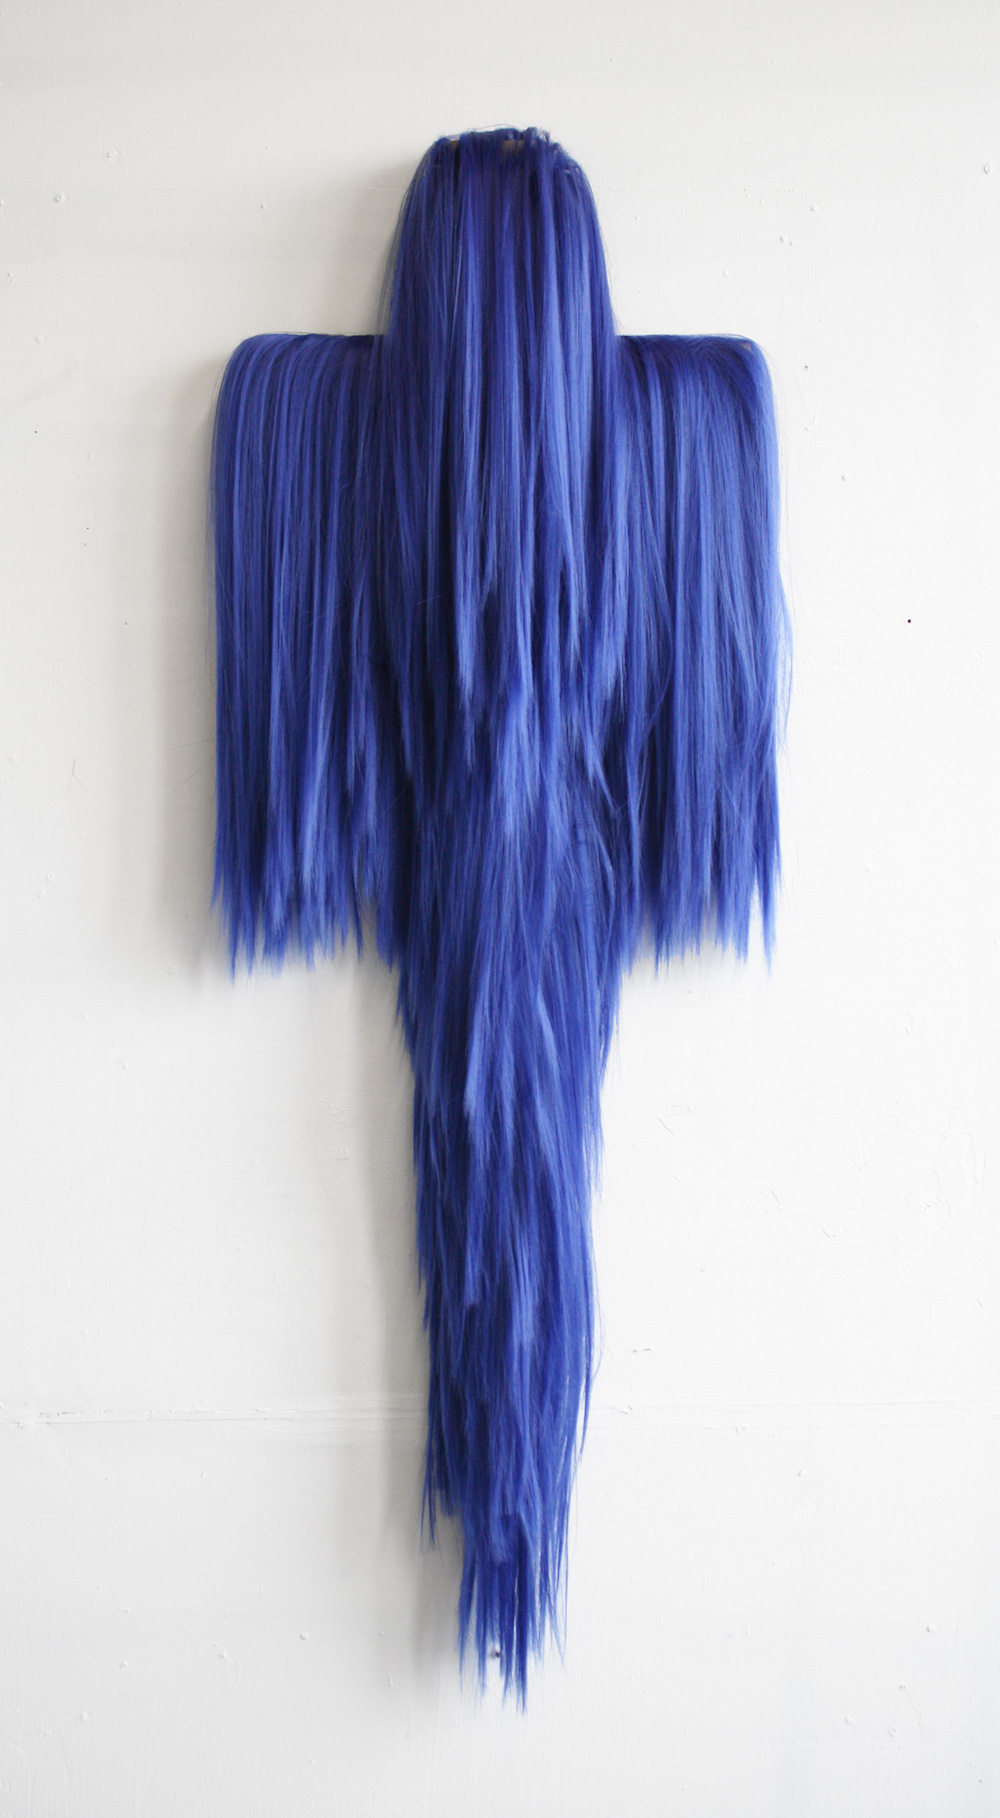  "Sacramental"&nbsp; 110 cm x 40cm Blue Futura Yuki synthetic hair and wood 2015 